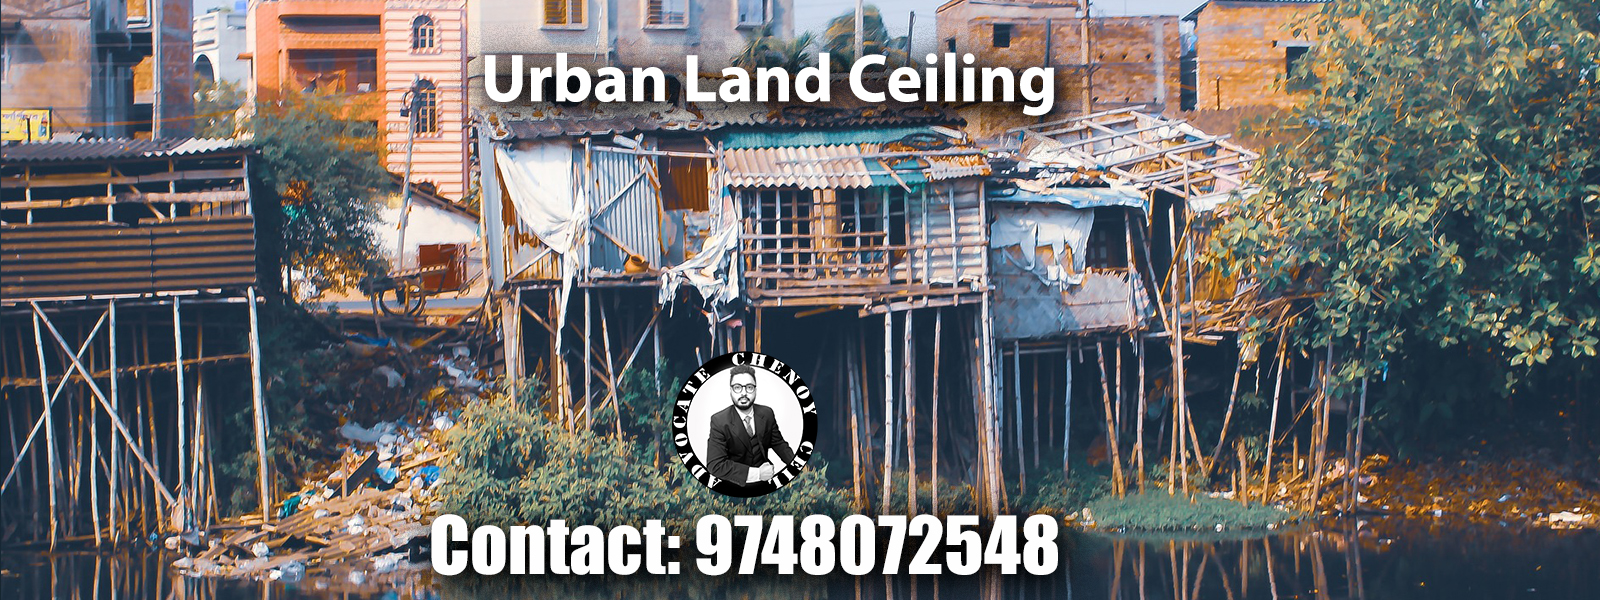 Urban Land Ceiling West Bengal